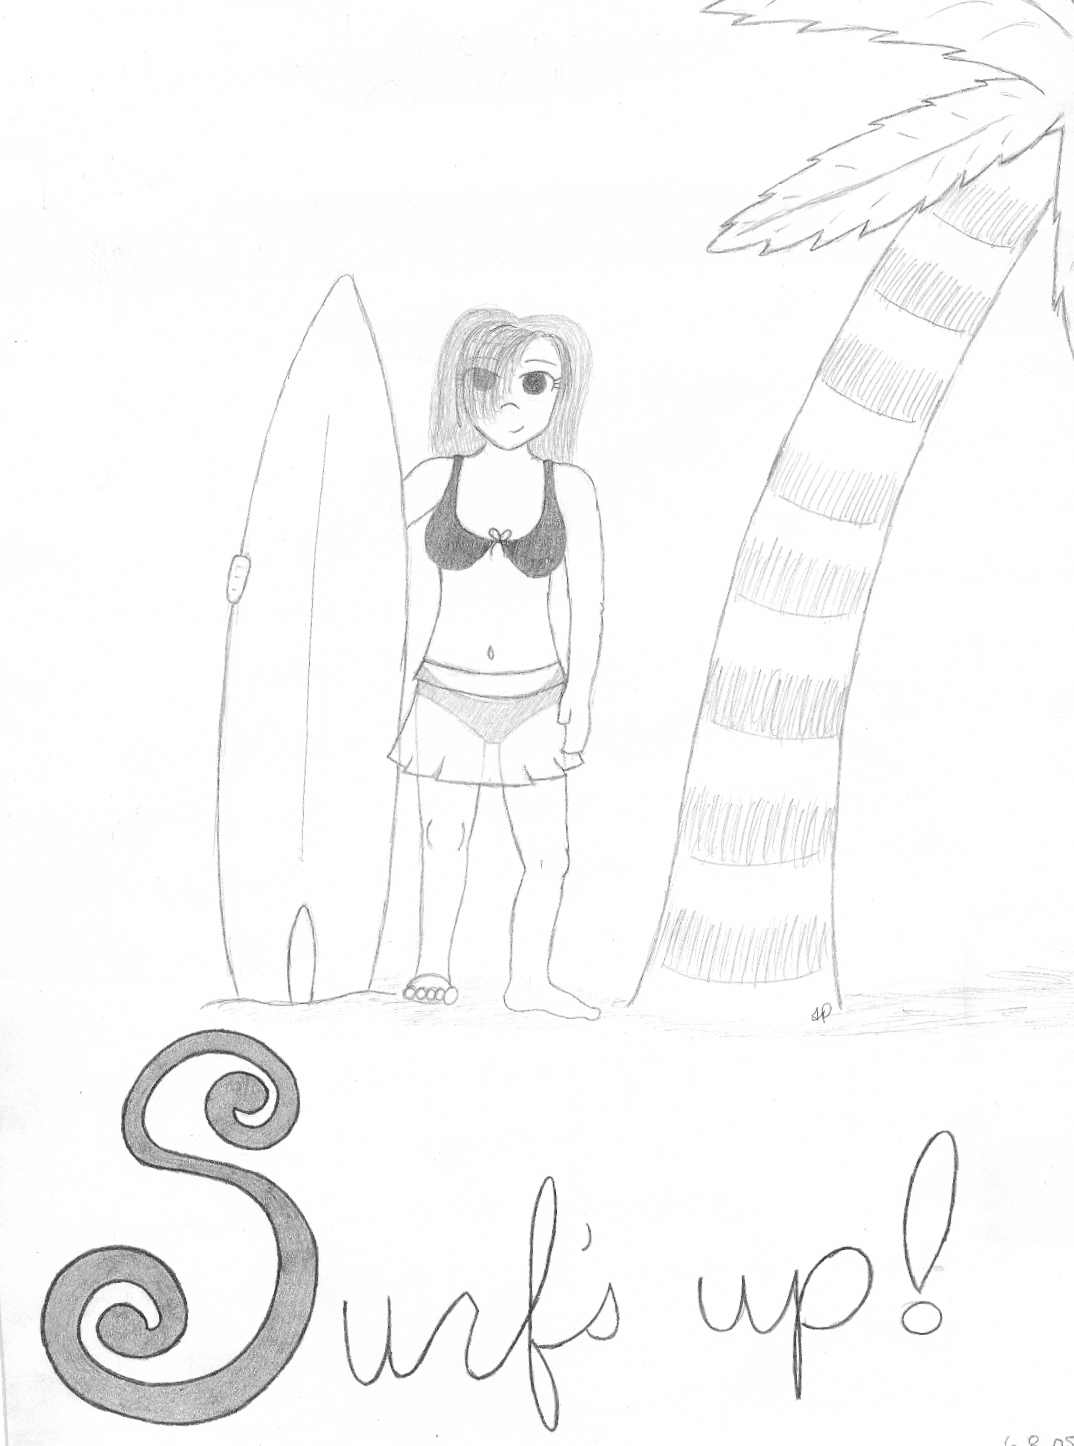 Surf's up! by dvils_advocat